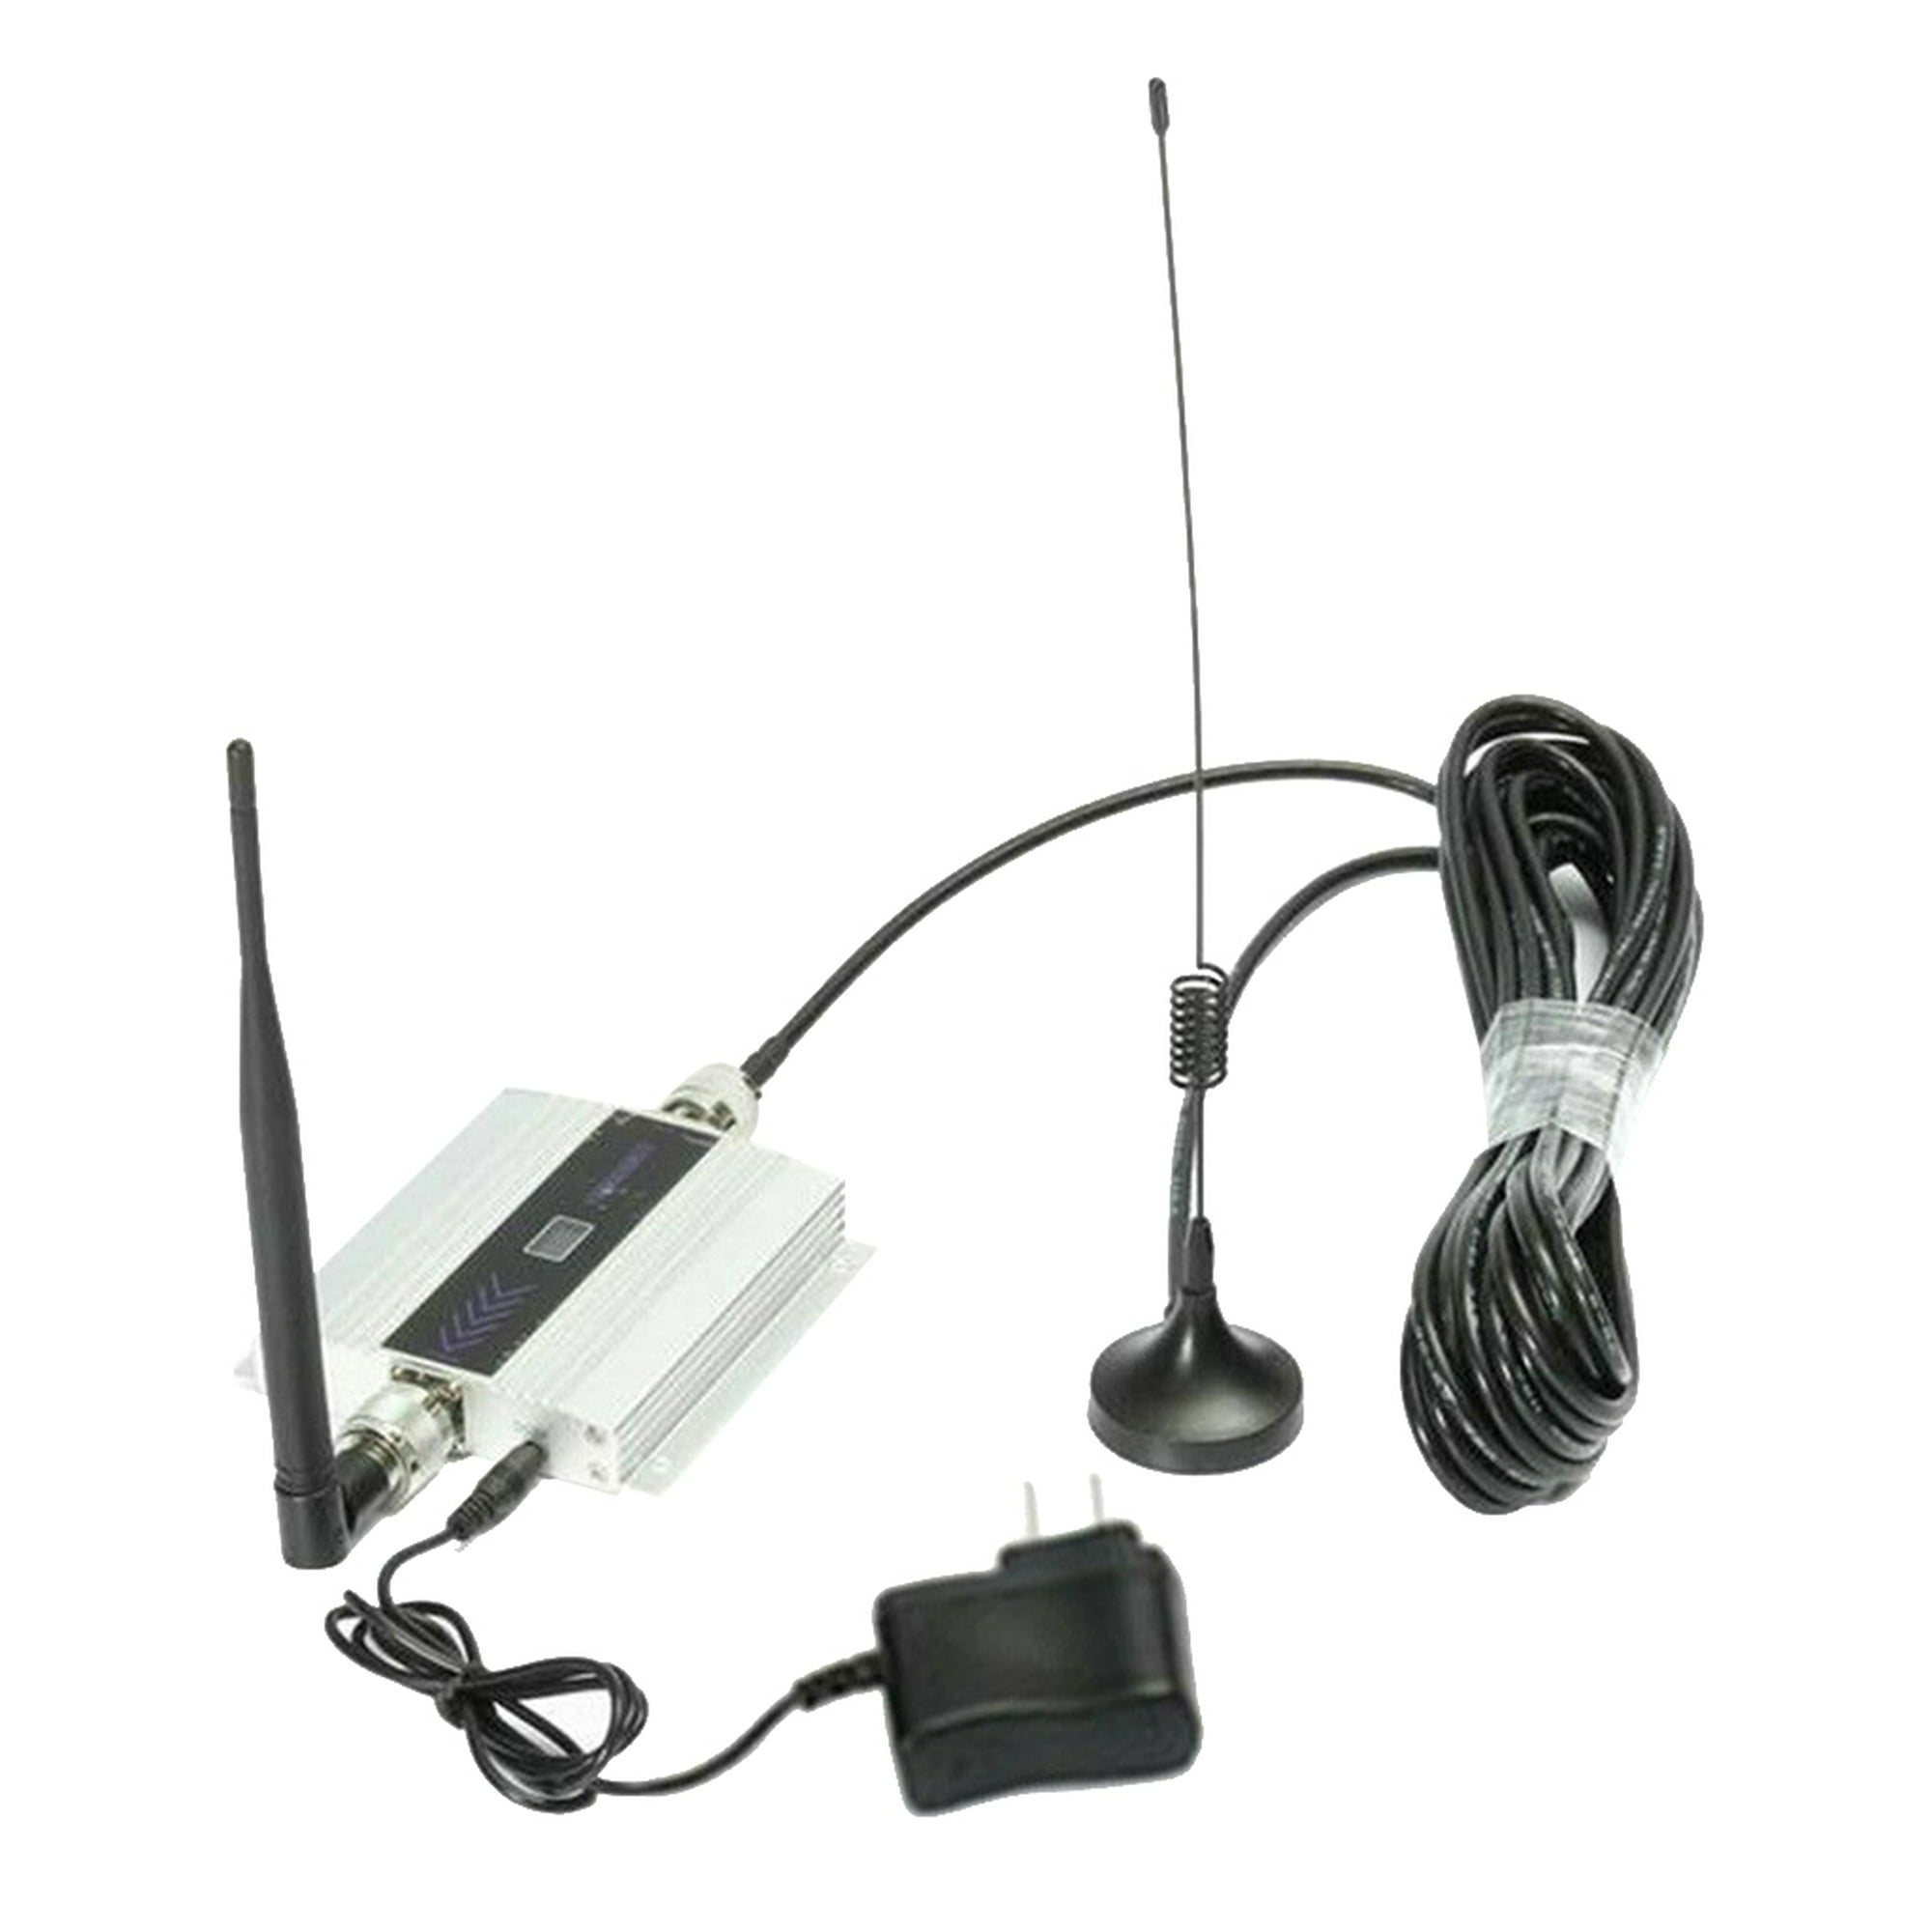 Amplificador de señal de teléfono Sunnimix 900MHz, Repetidor de señal 1x